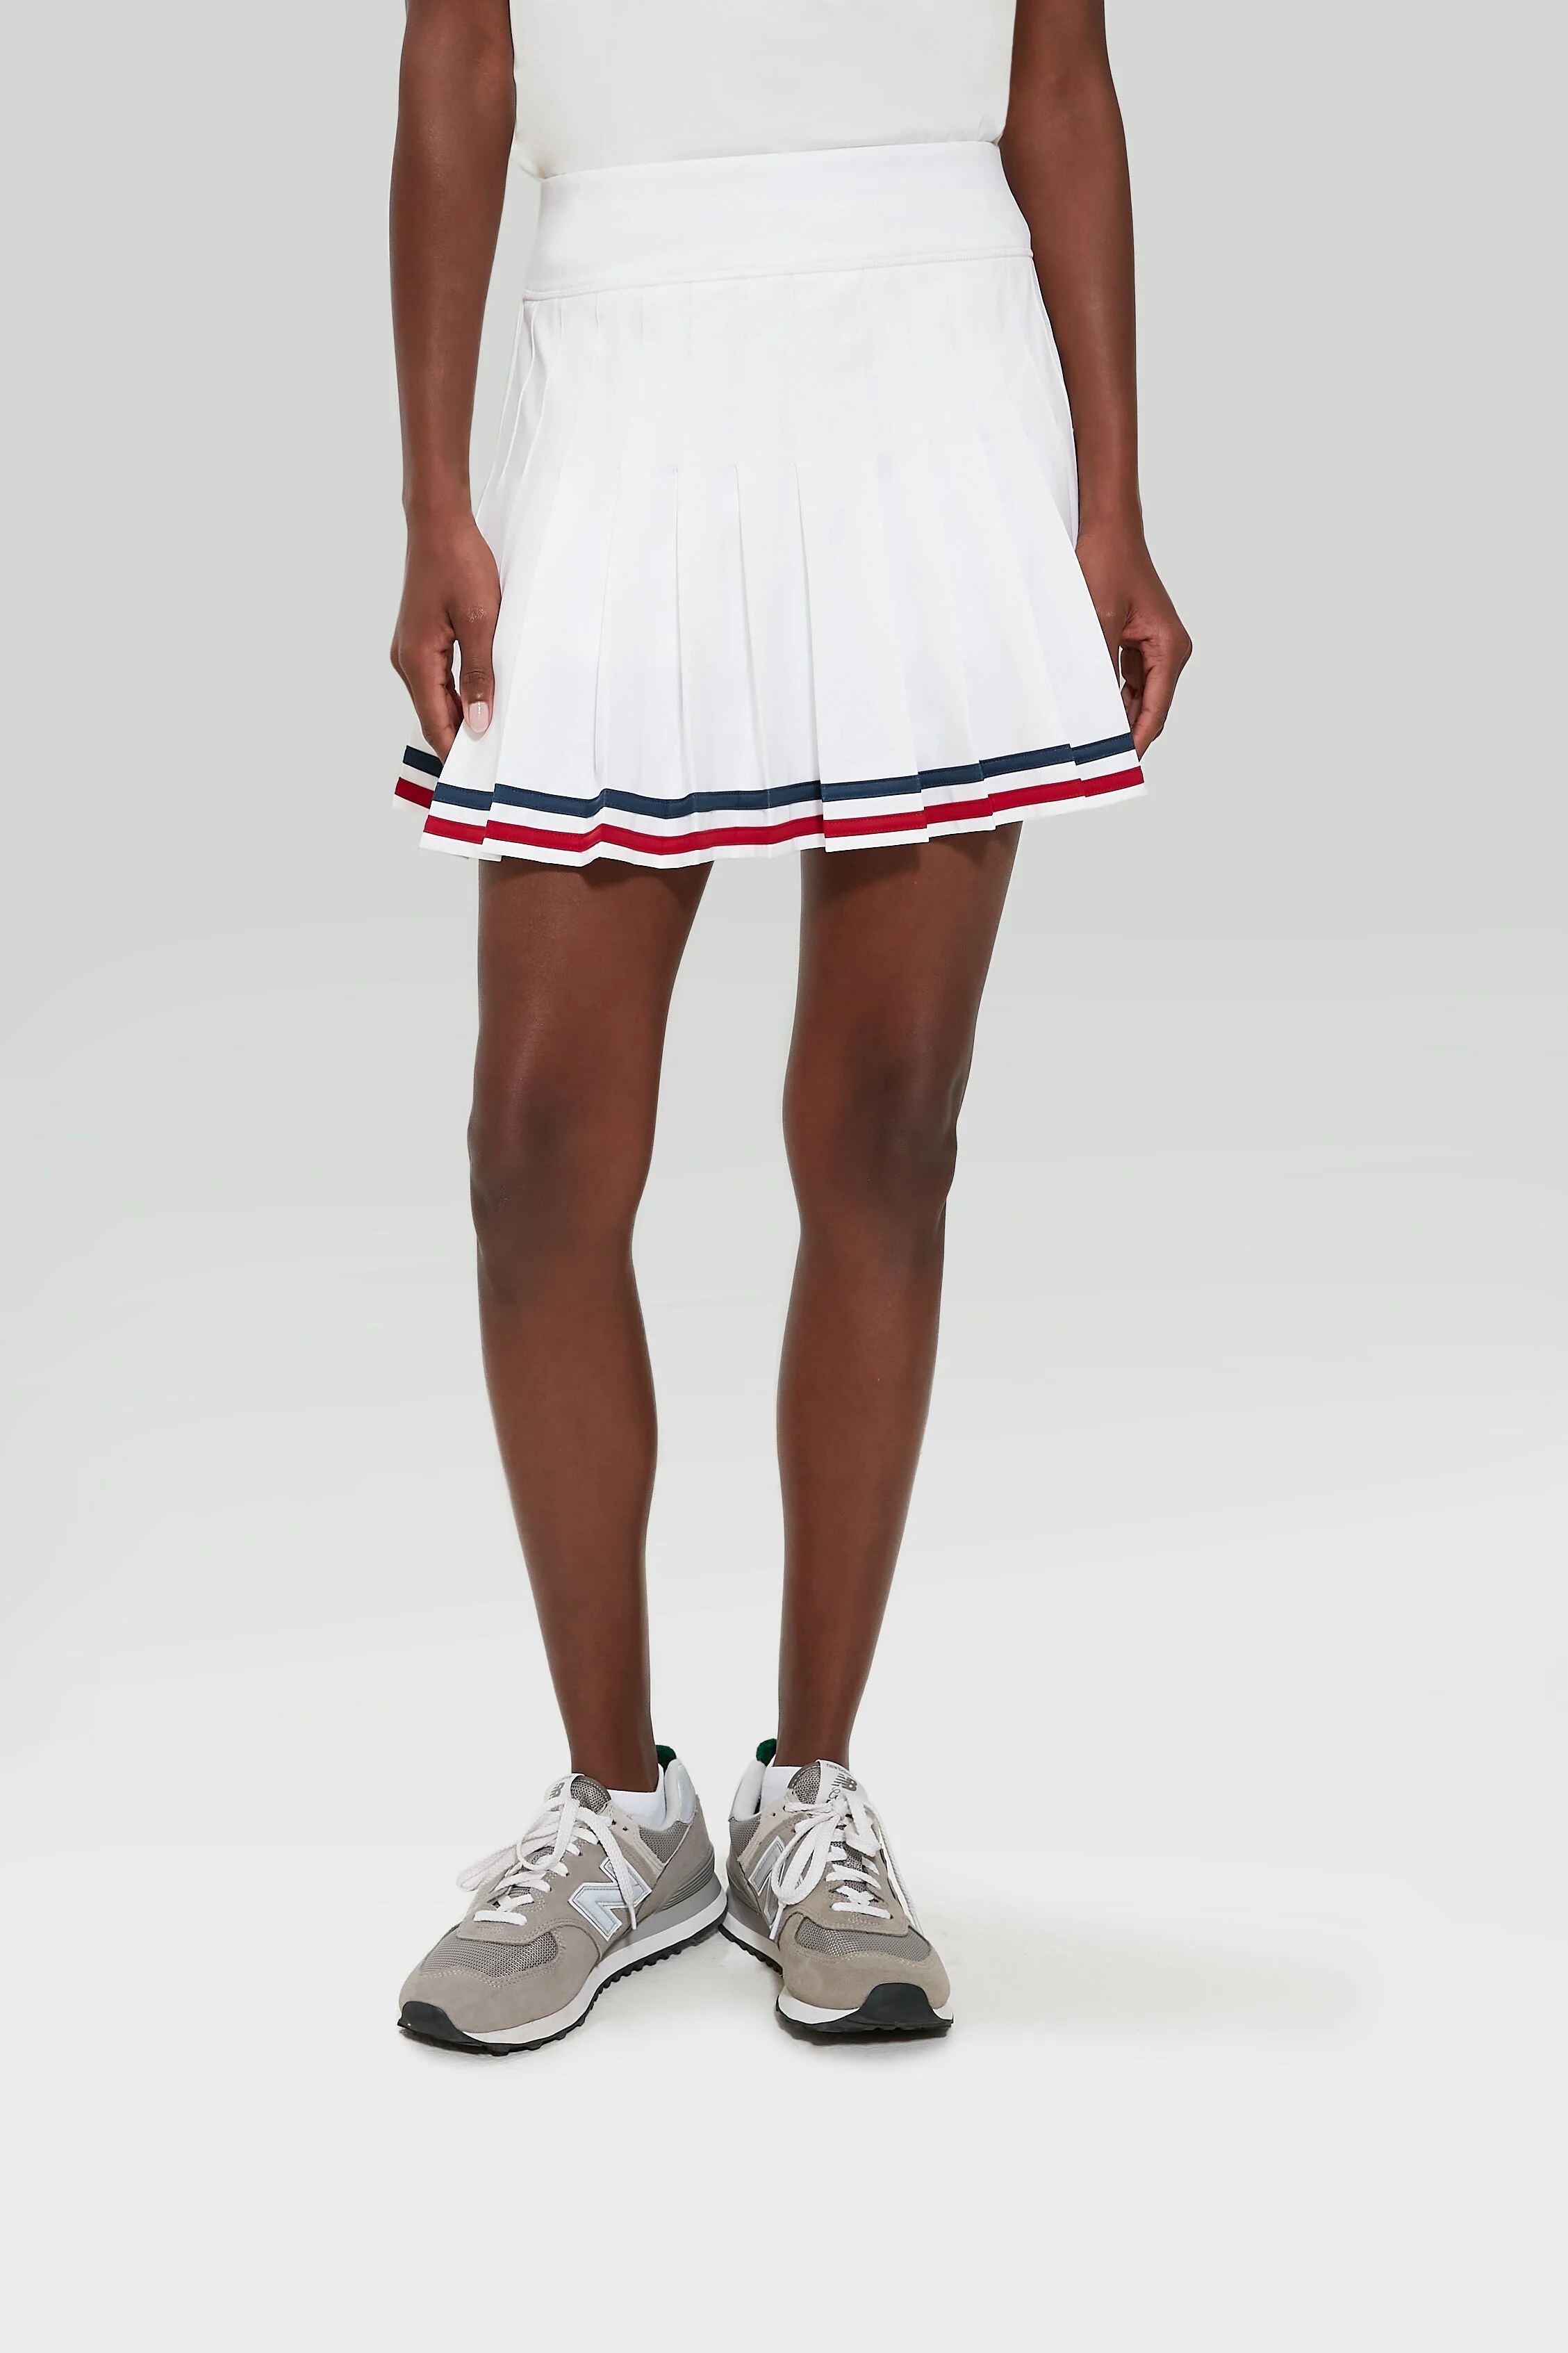 Americana 15 Inch Tennis Skirt | Tuckernuck (US)